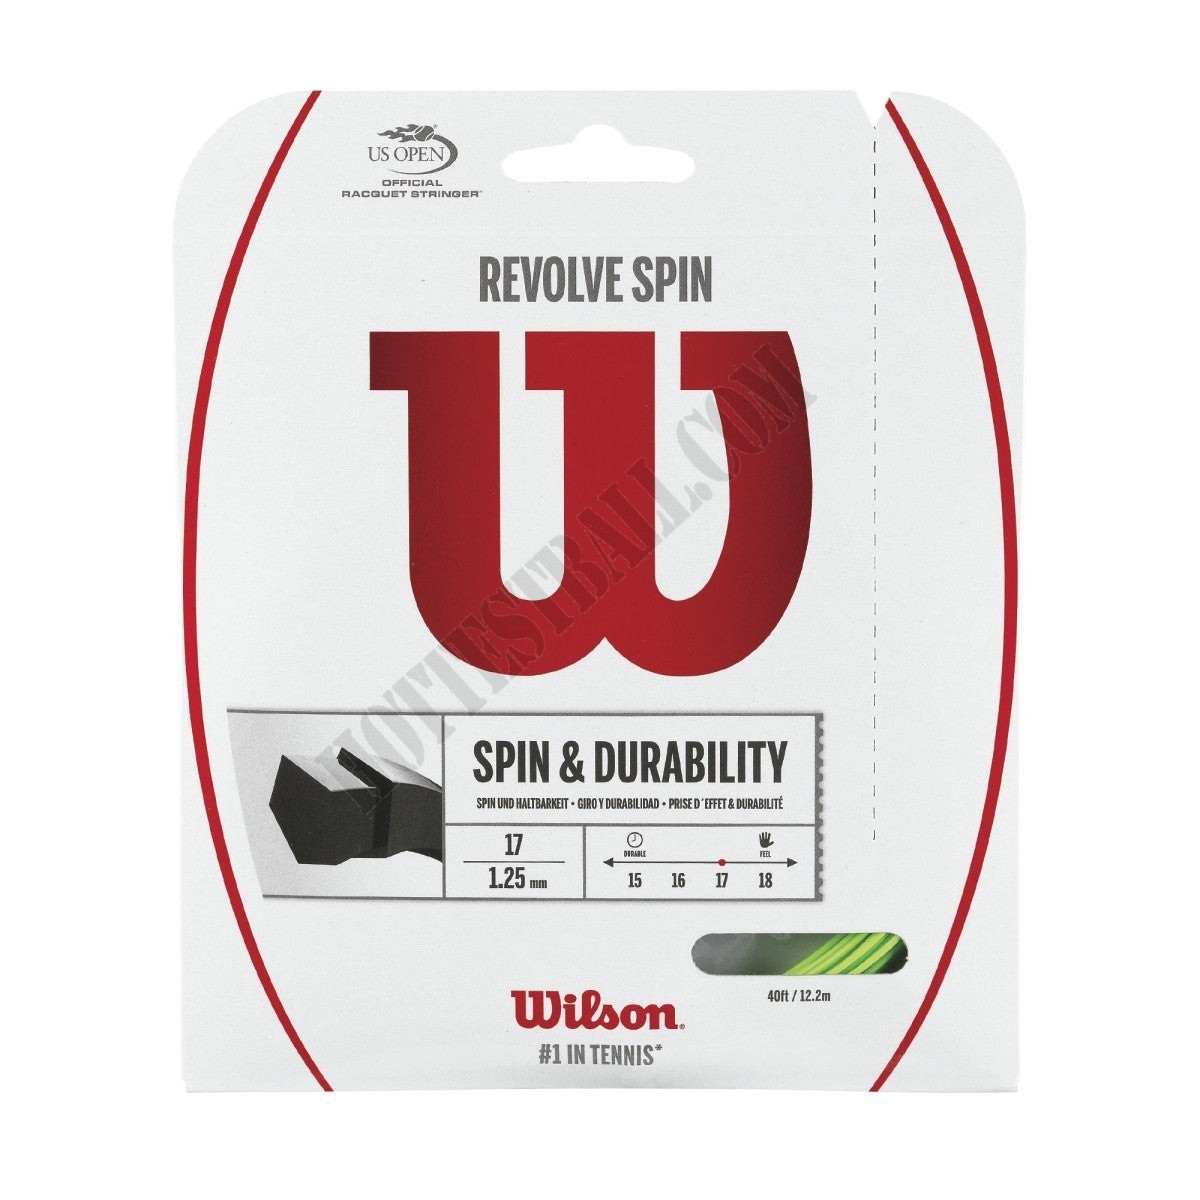 Revolve Spin Tennis String - Set - Wilson Discount Store - -0